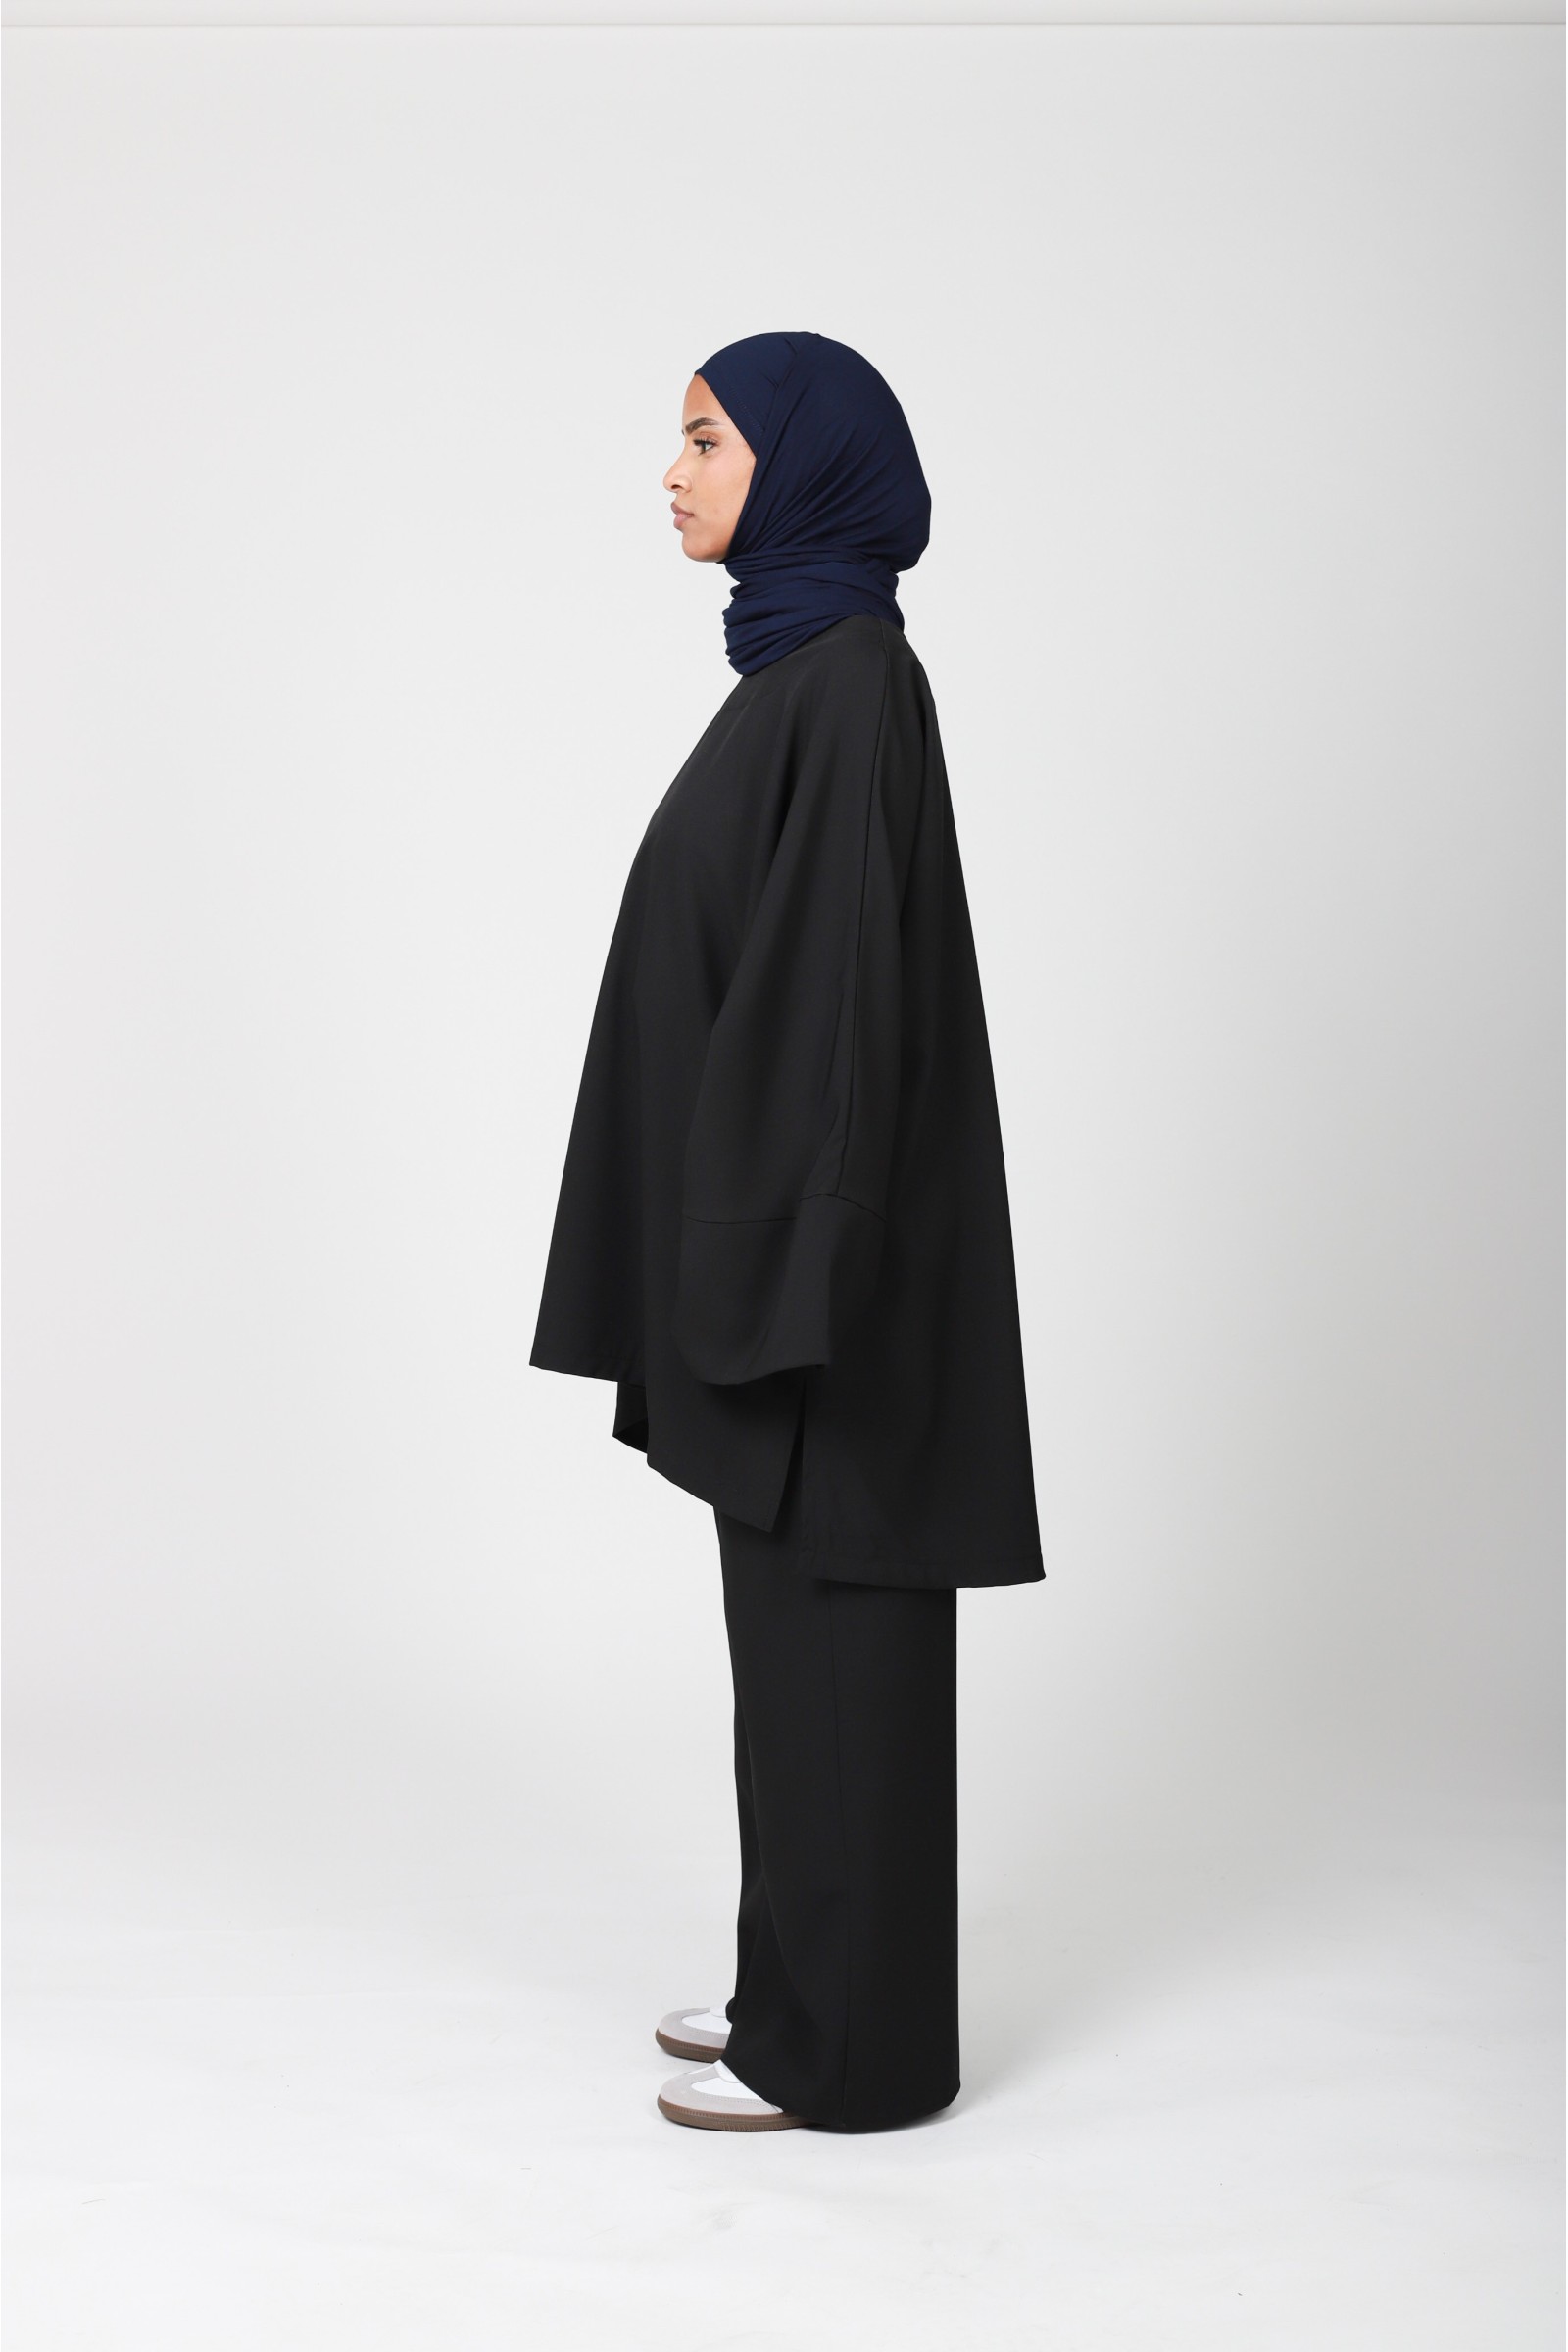 Modest pant set for Muslim women 2024